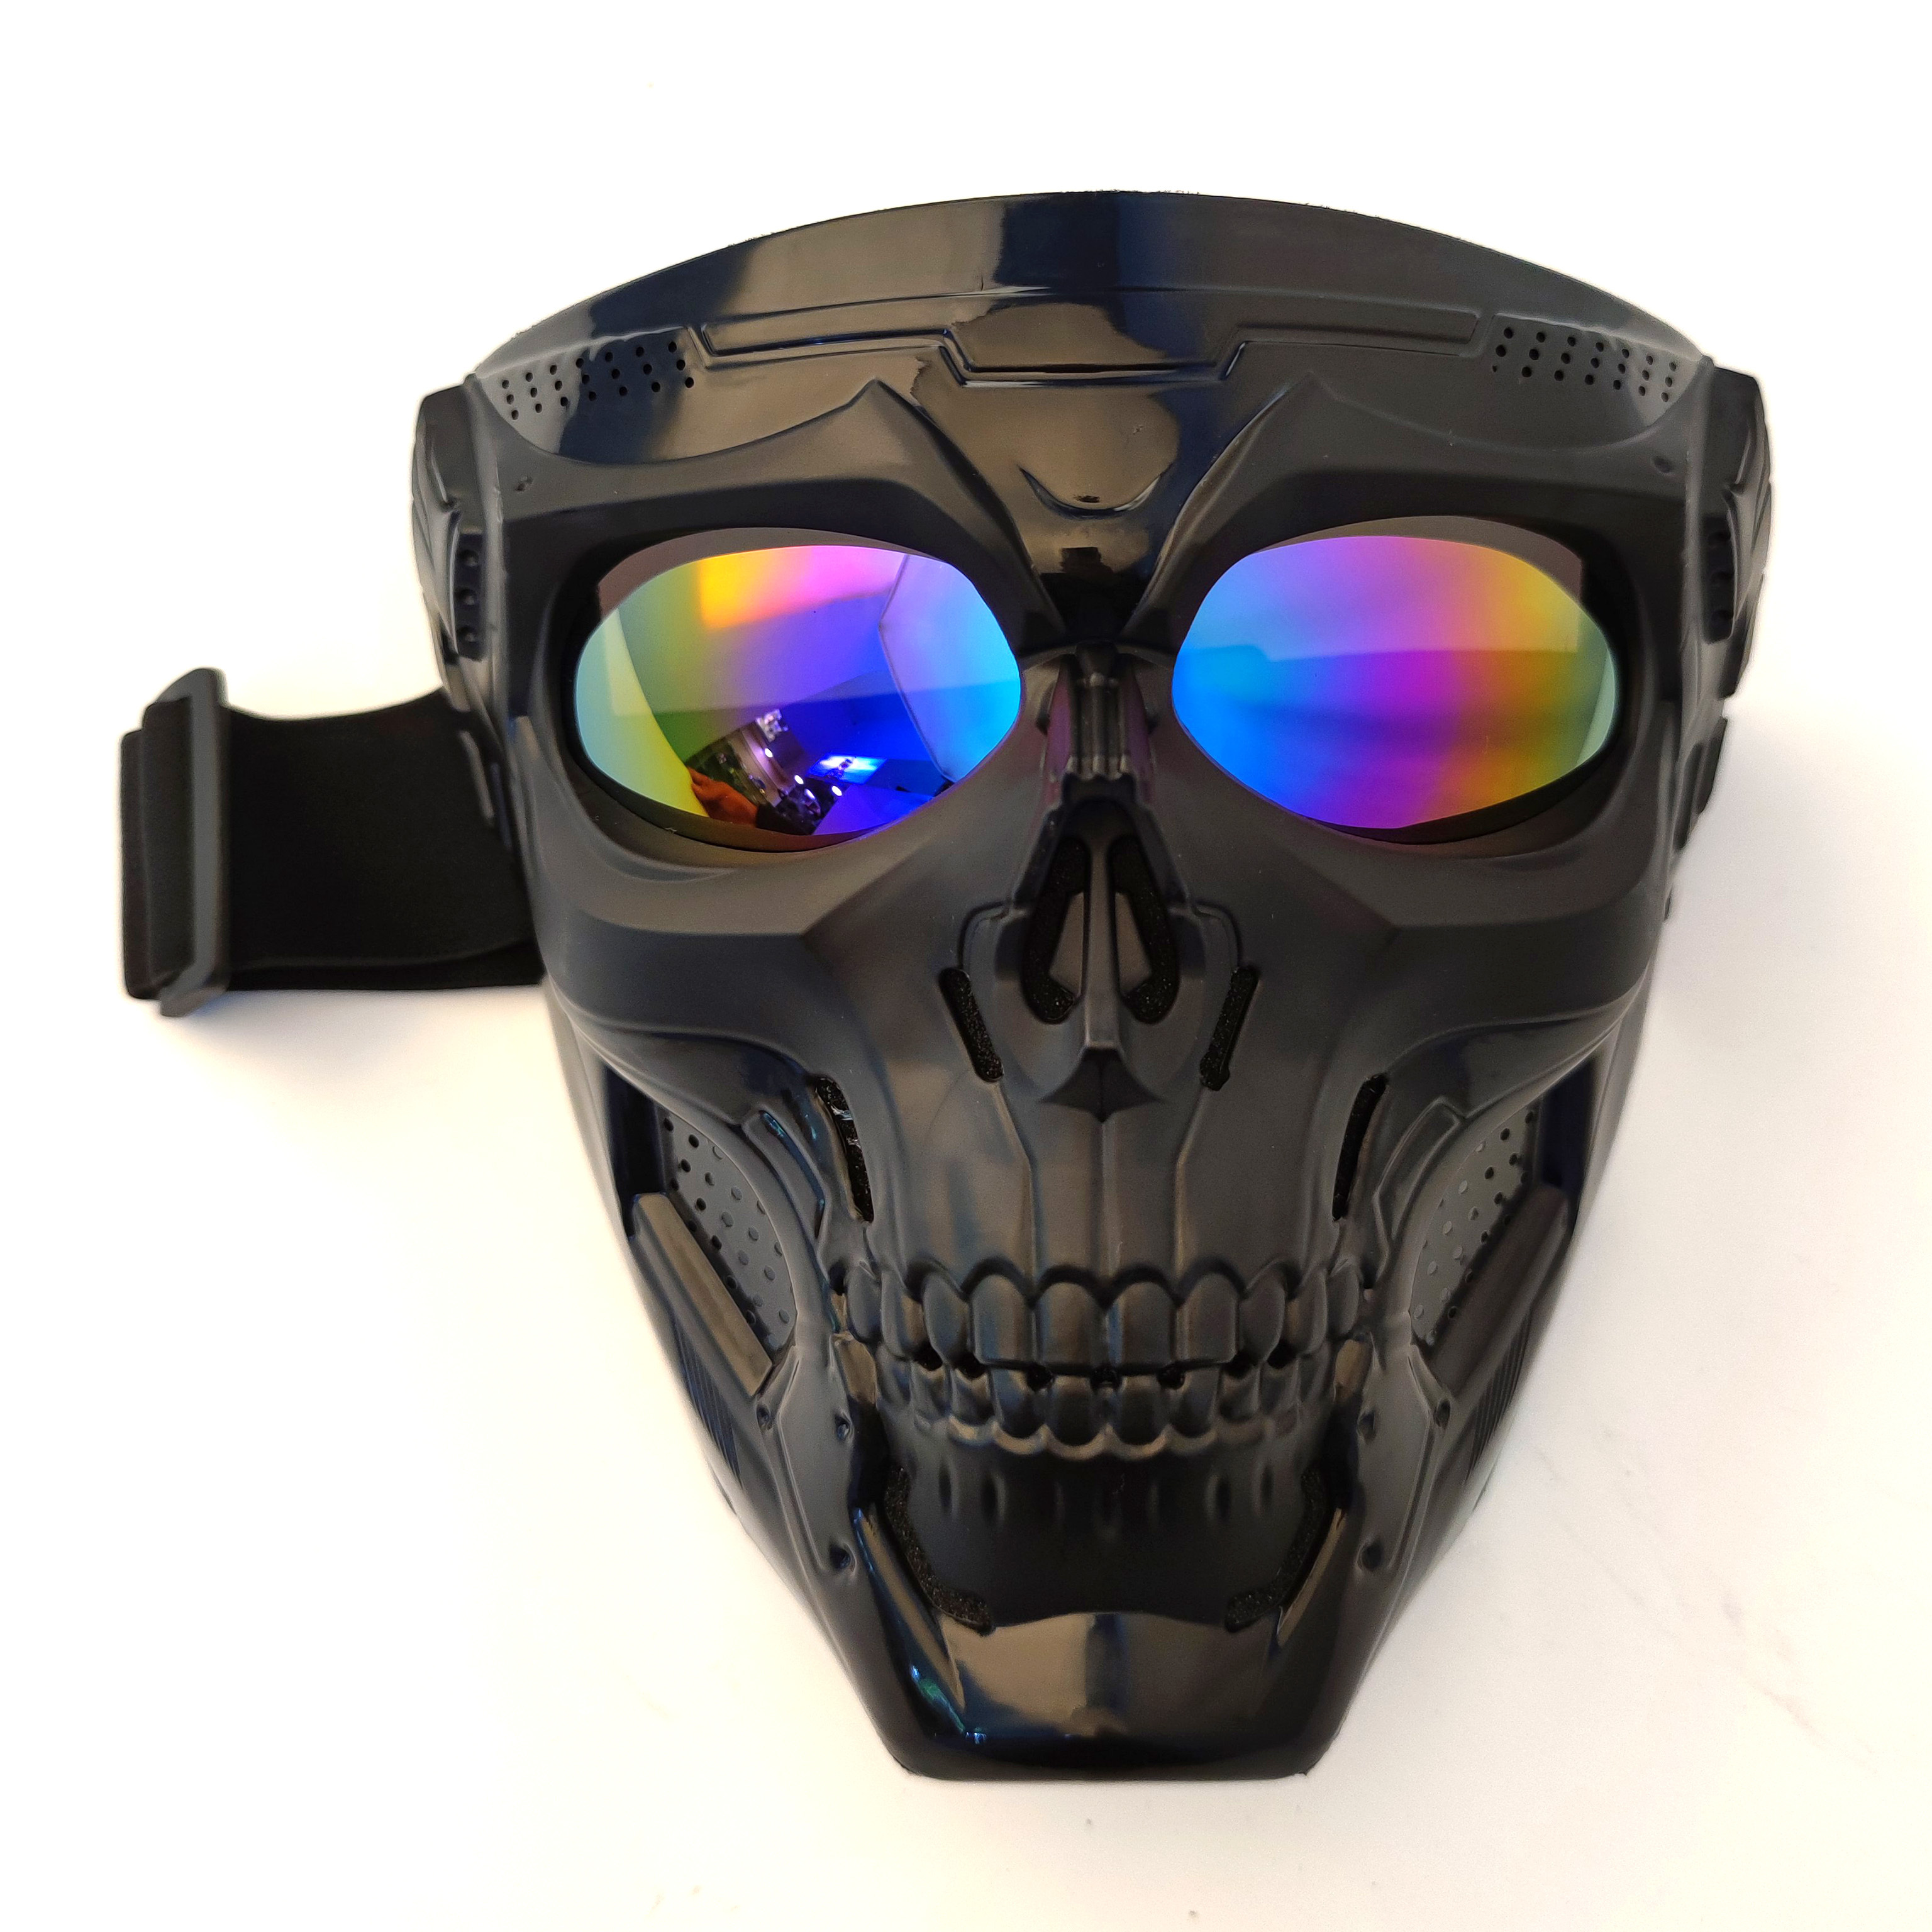 Airsoft balaclava masks - shop Gunfire